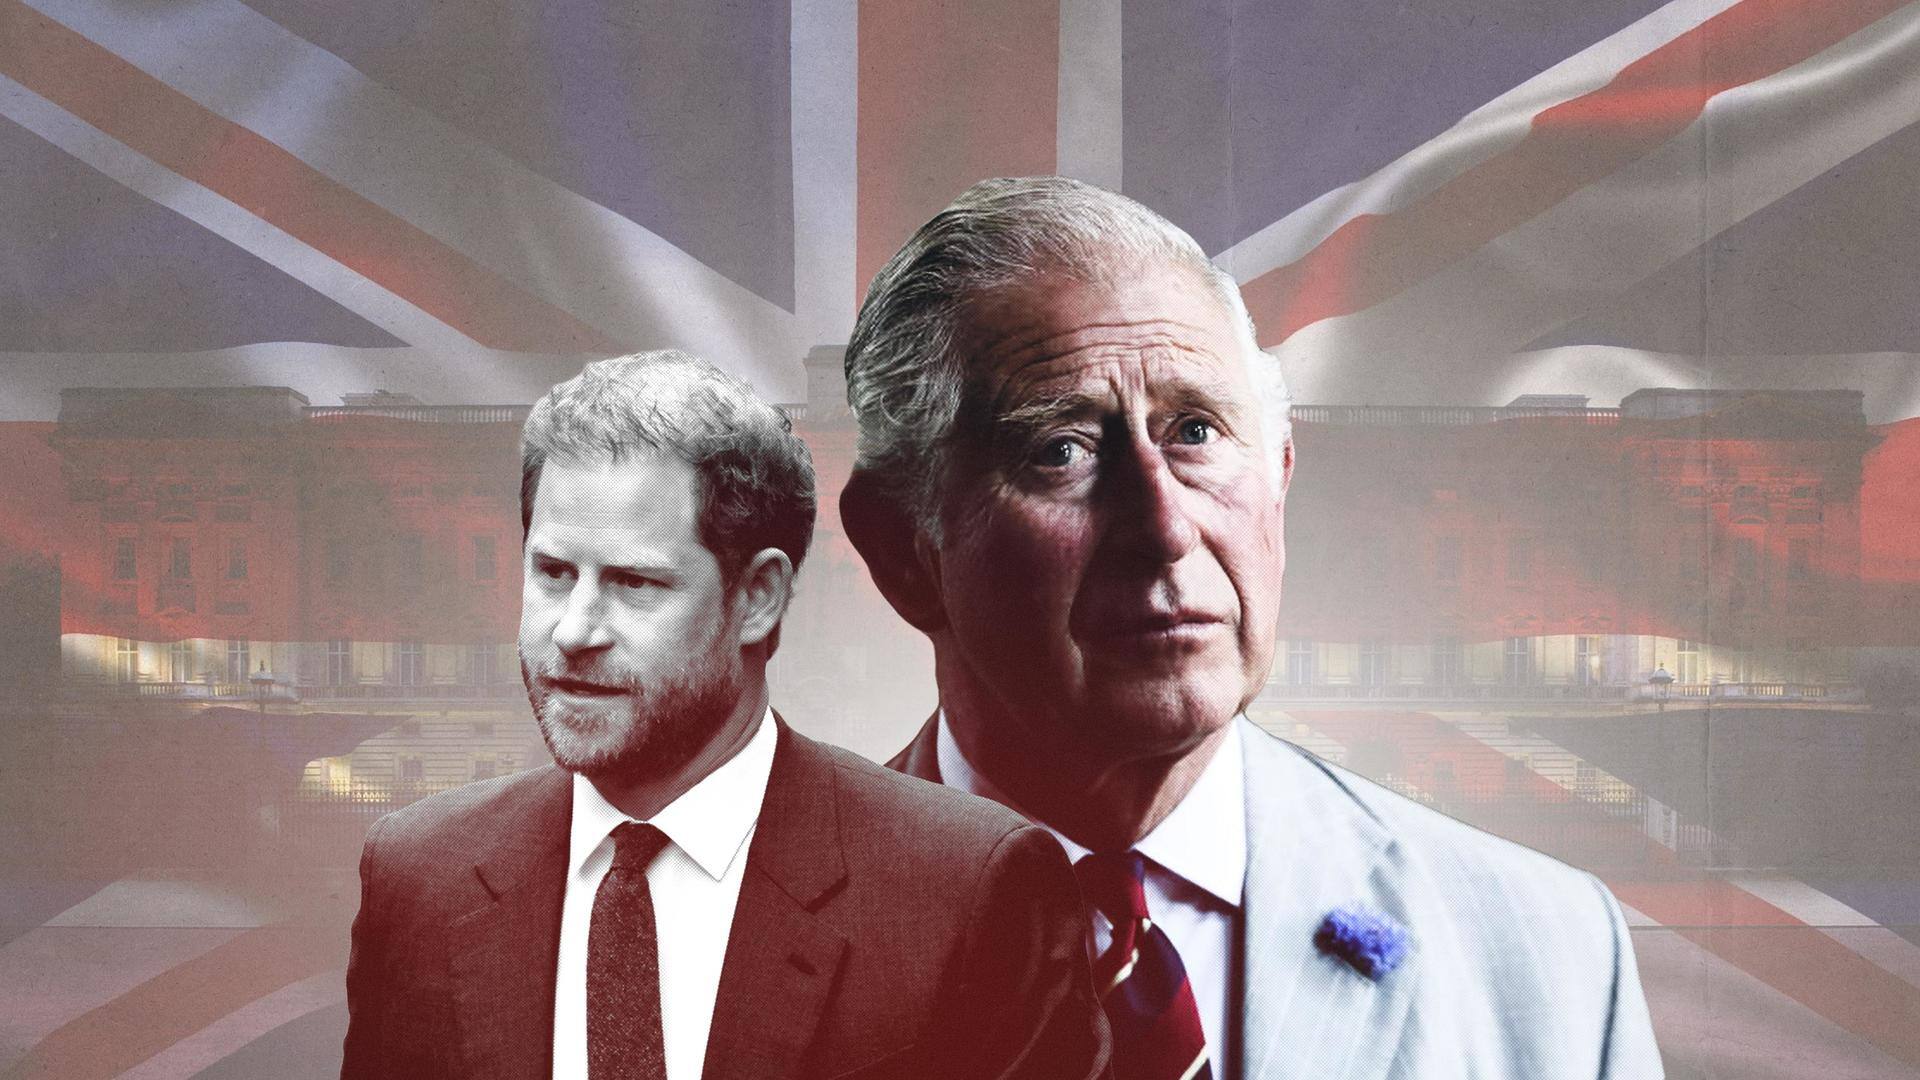 Prince Harry may skip King Charles III's coronation